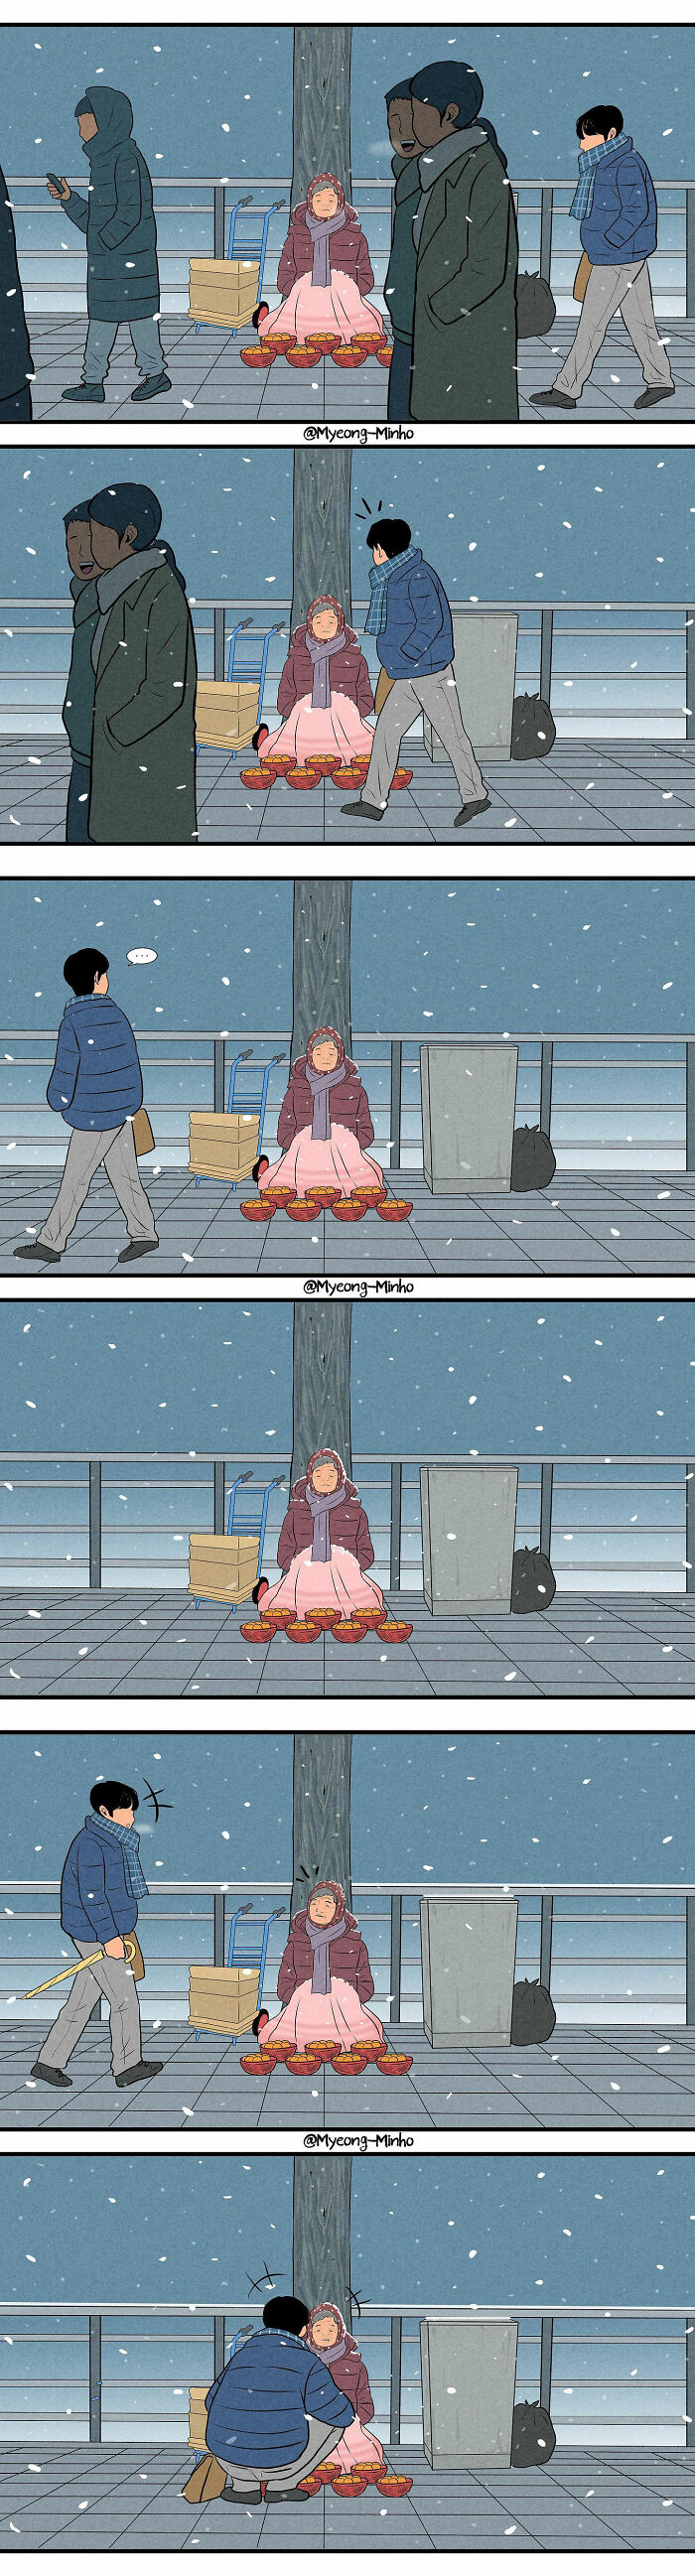 Artist Creates Heartwarming Illustrations Showing That Everyday Joys Make Life Extraordinary (11 Stories)